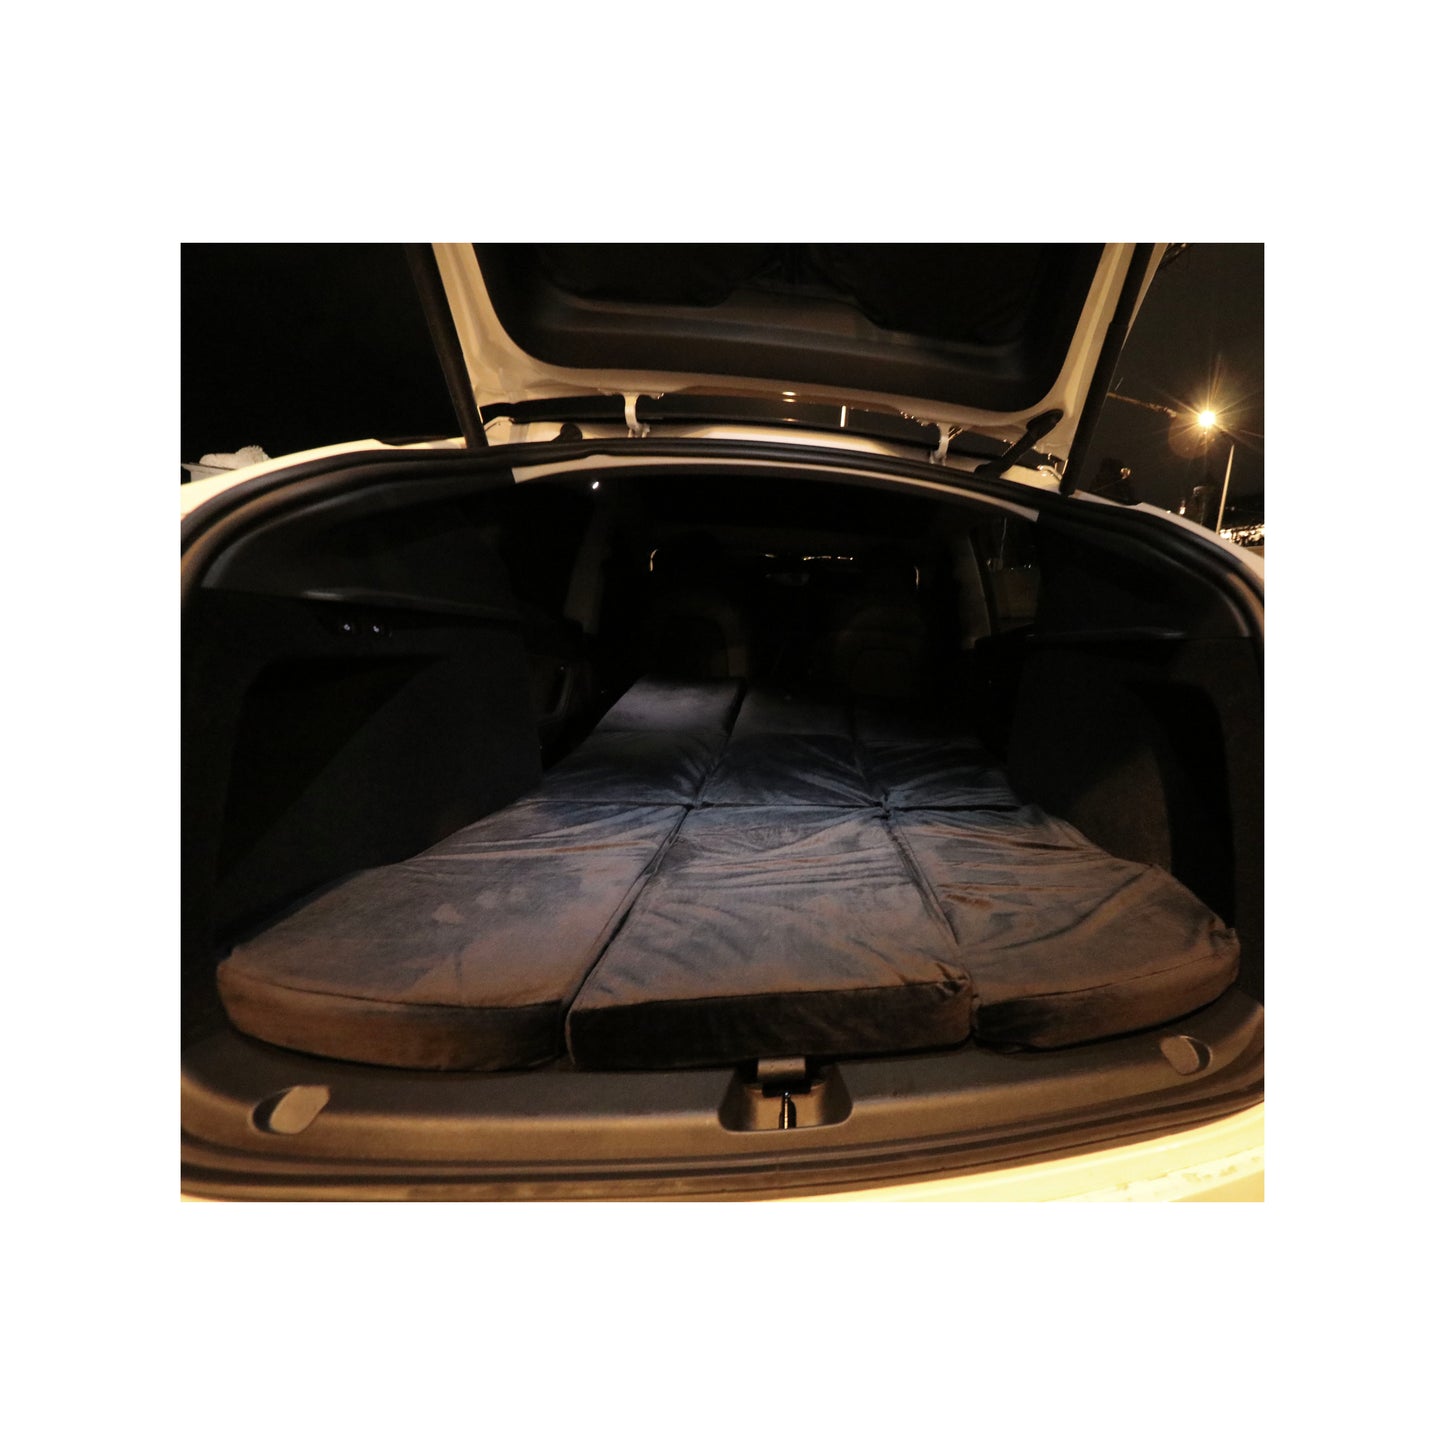 EV-MATS Tesla Model Y 床垫和携带袋是一款优质的记忆海绵床垫，完美符合 Tesla Model Y 的尺寸，提供完美的睡眠舒适度，可存放于行李厢